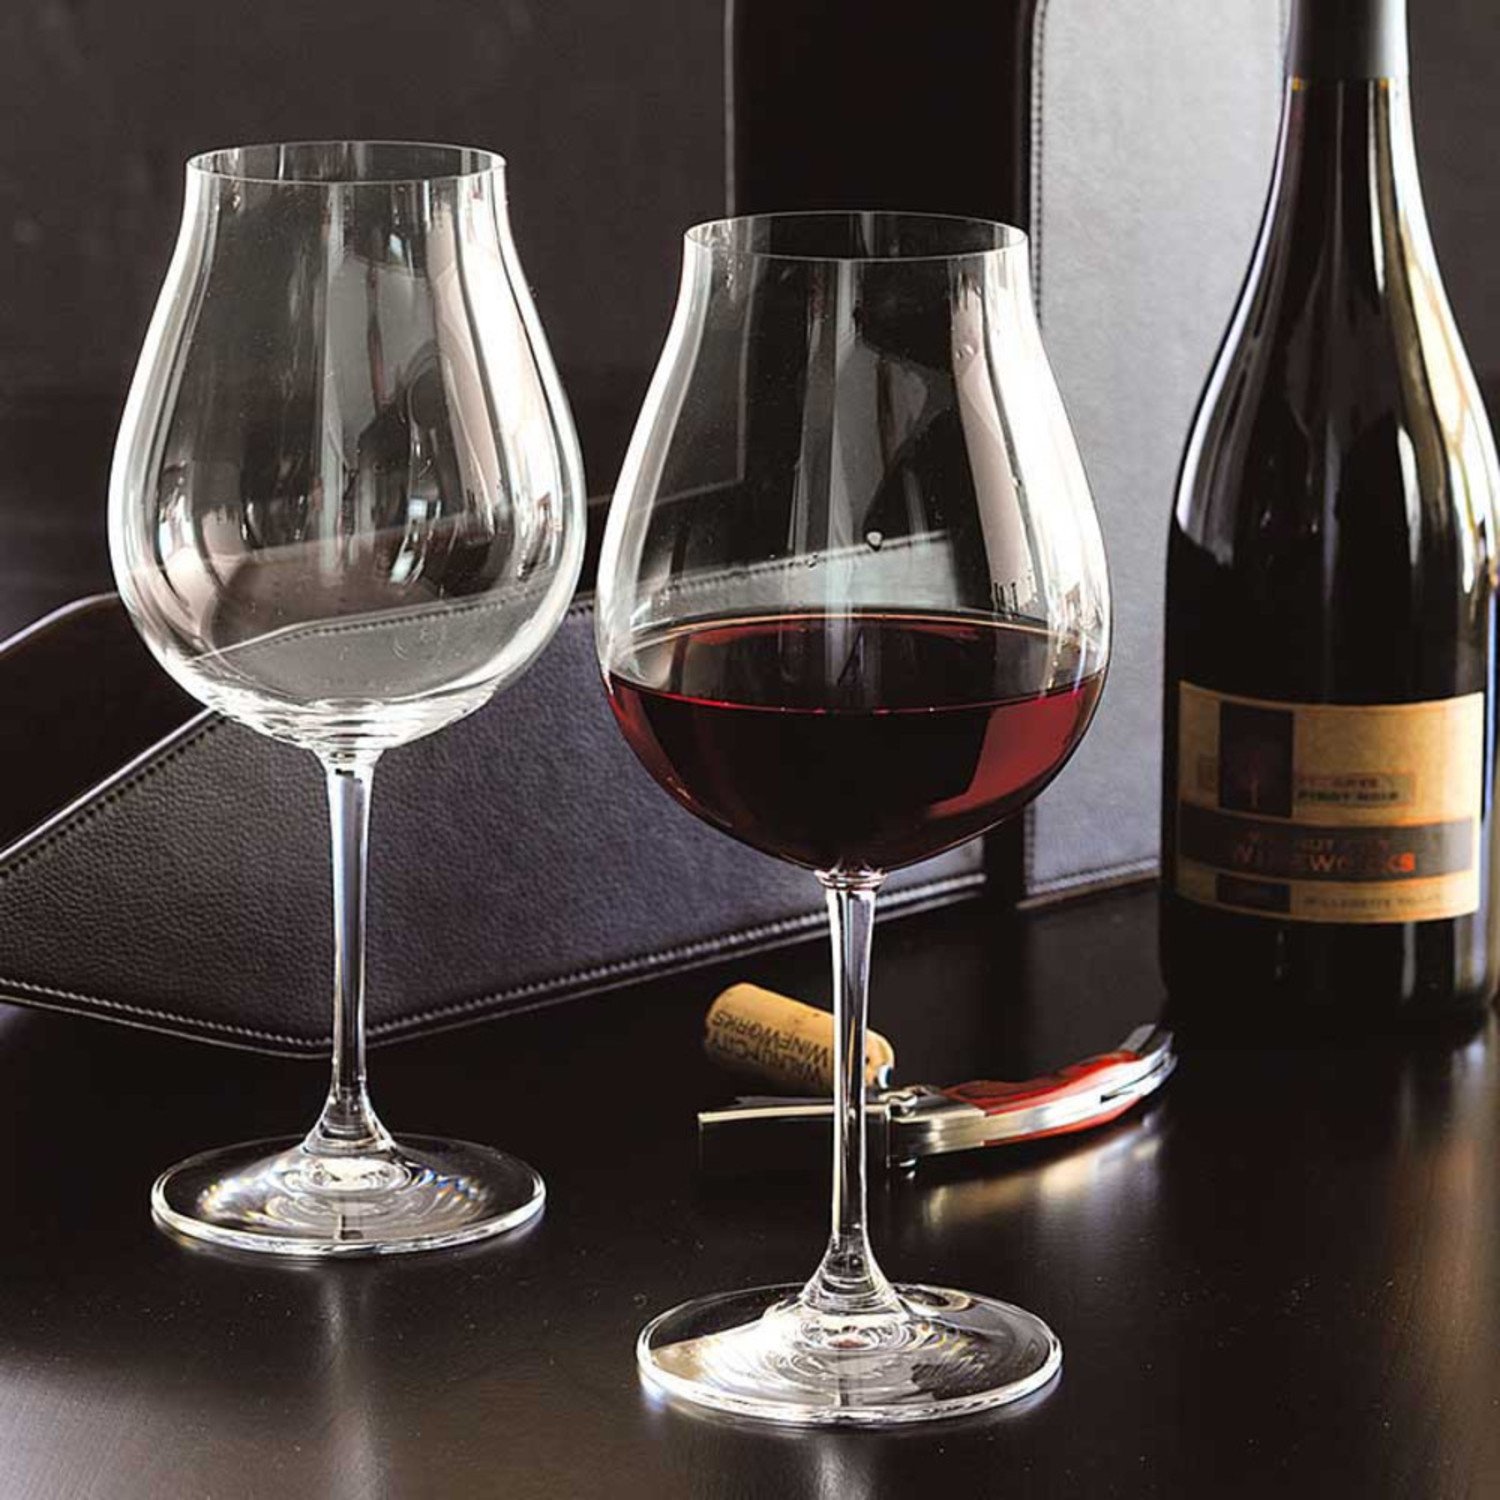 Wine Glasses, Set of 2 Vinum Pinot Noir